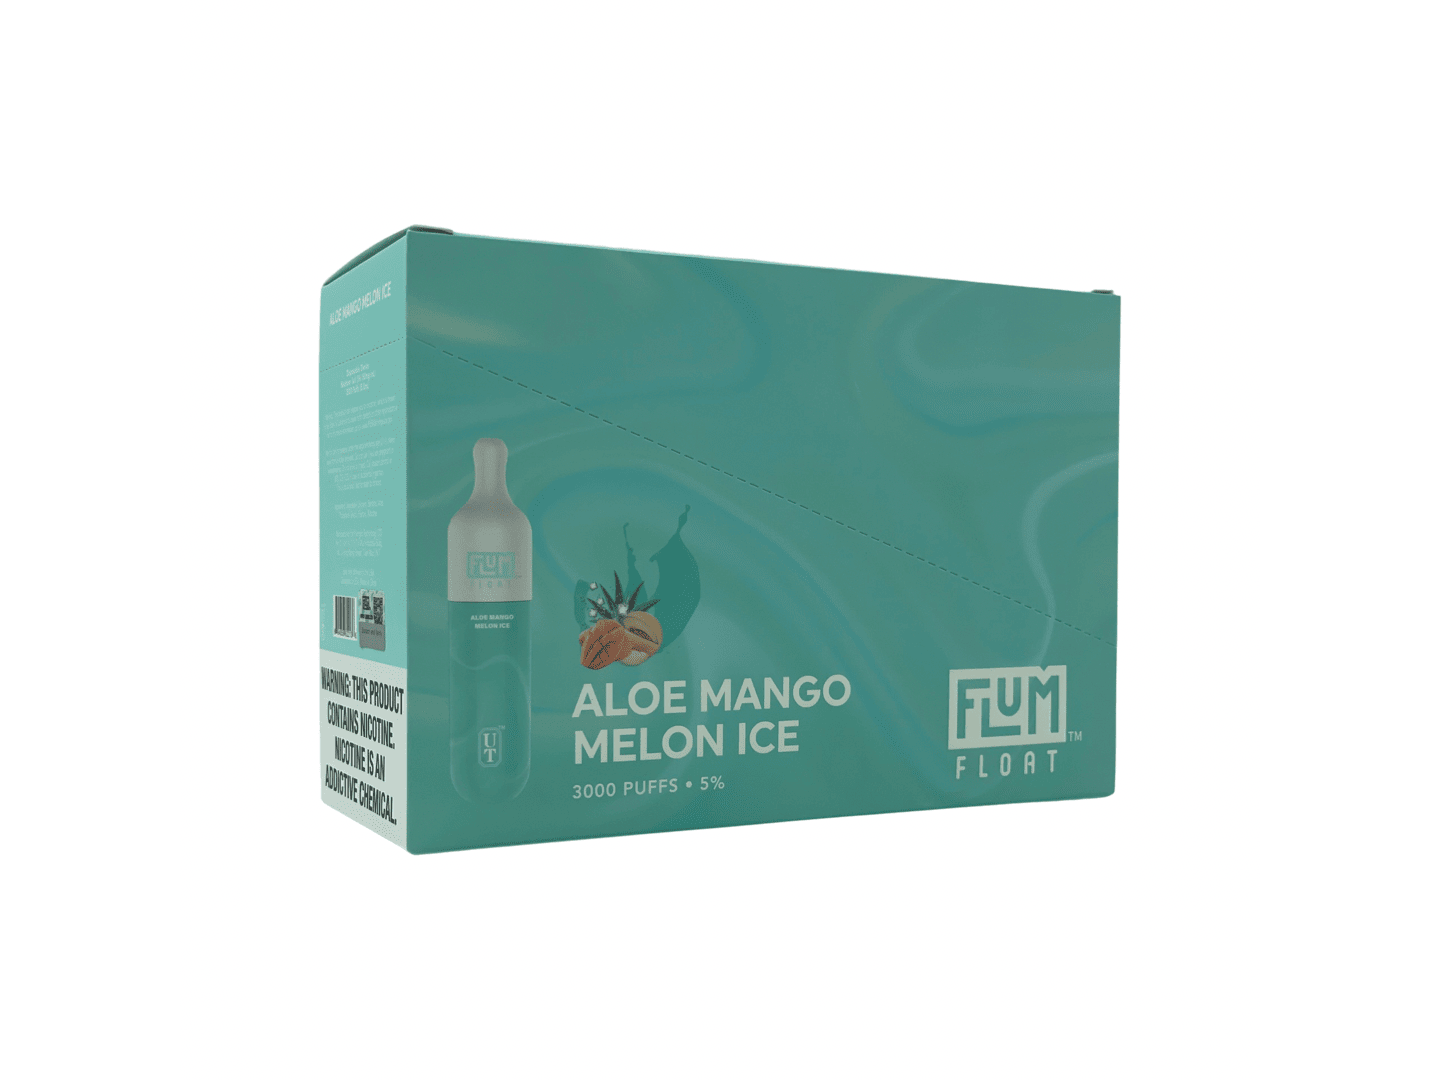 Flum Float Aloe Mango Melon Ice Flavor Box / Brick disposable vape